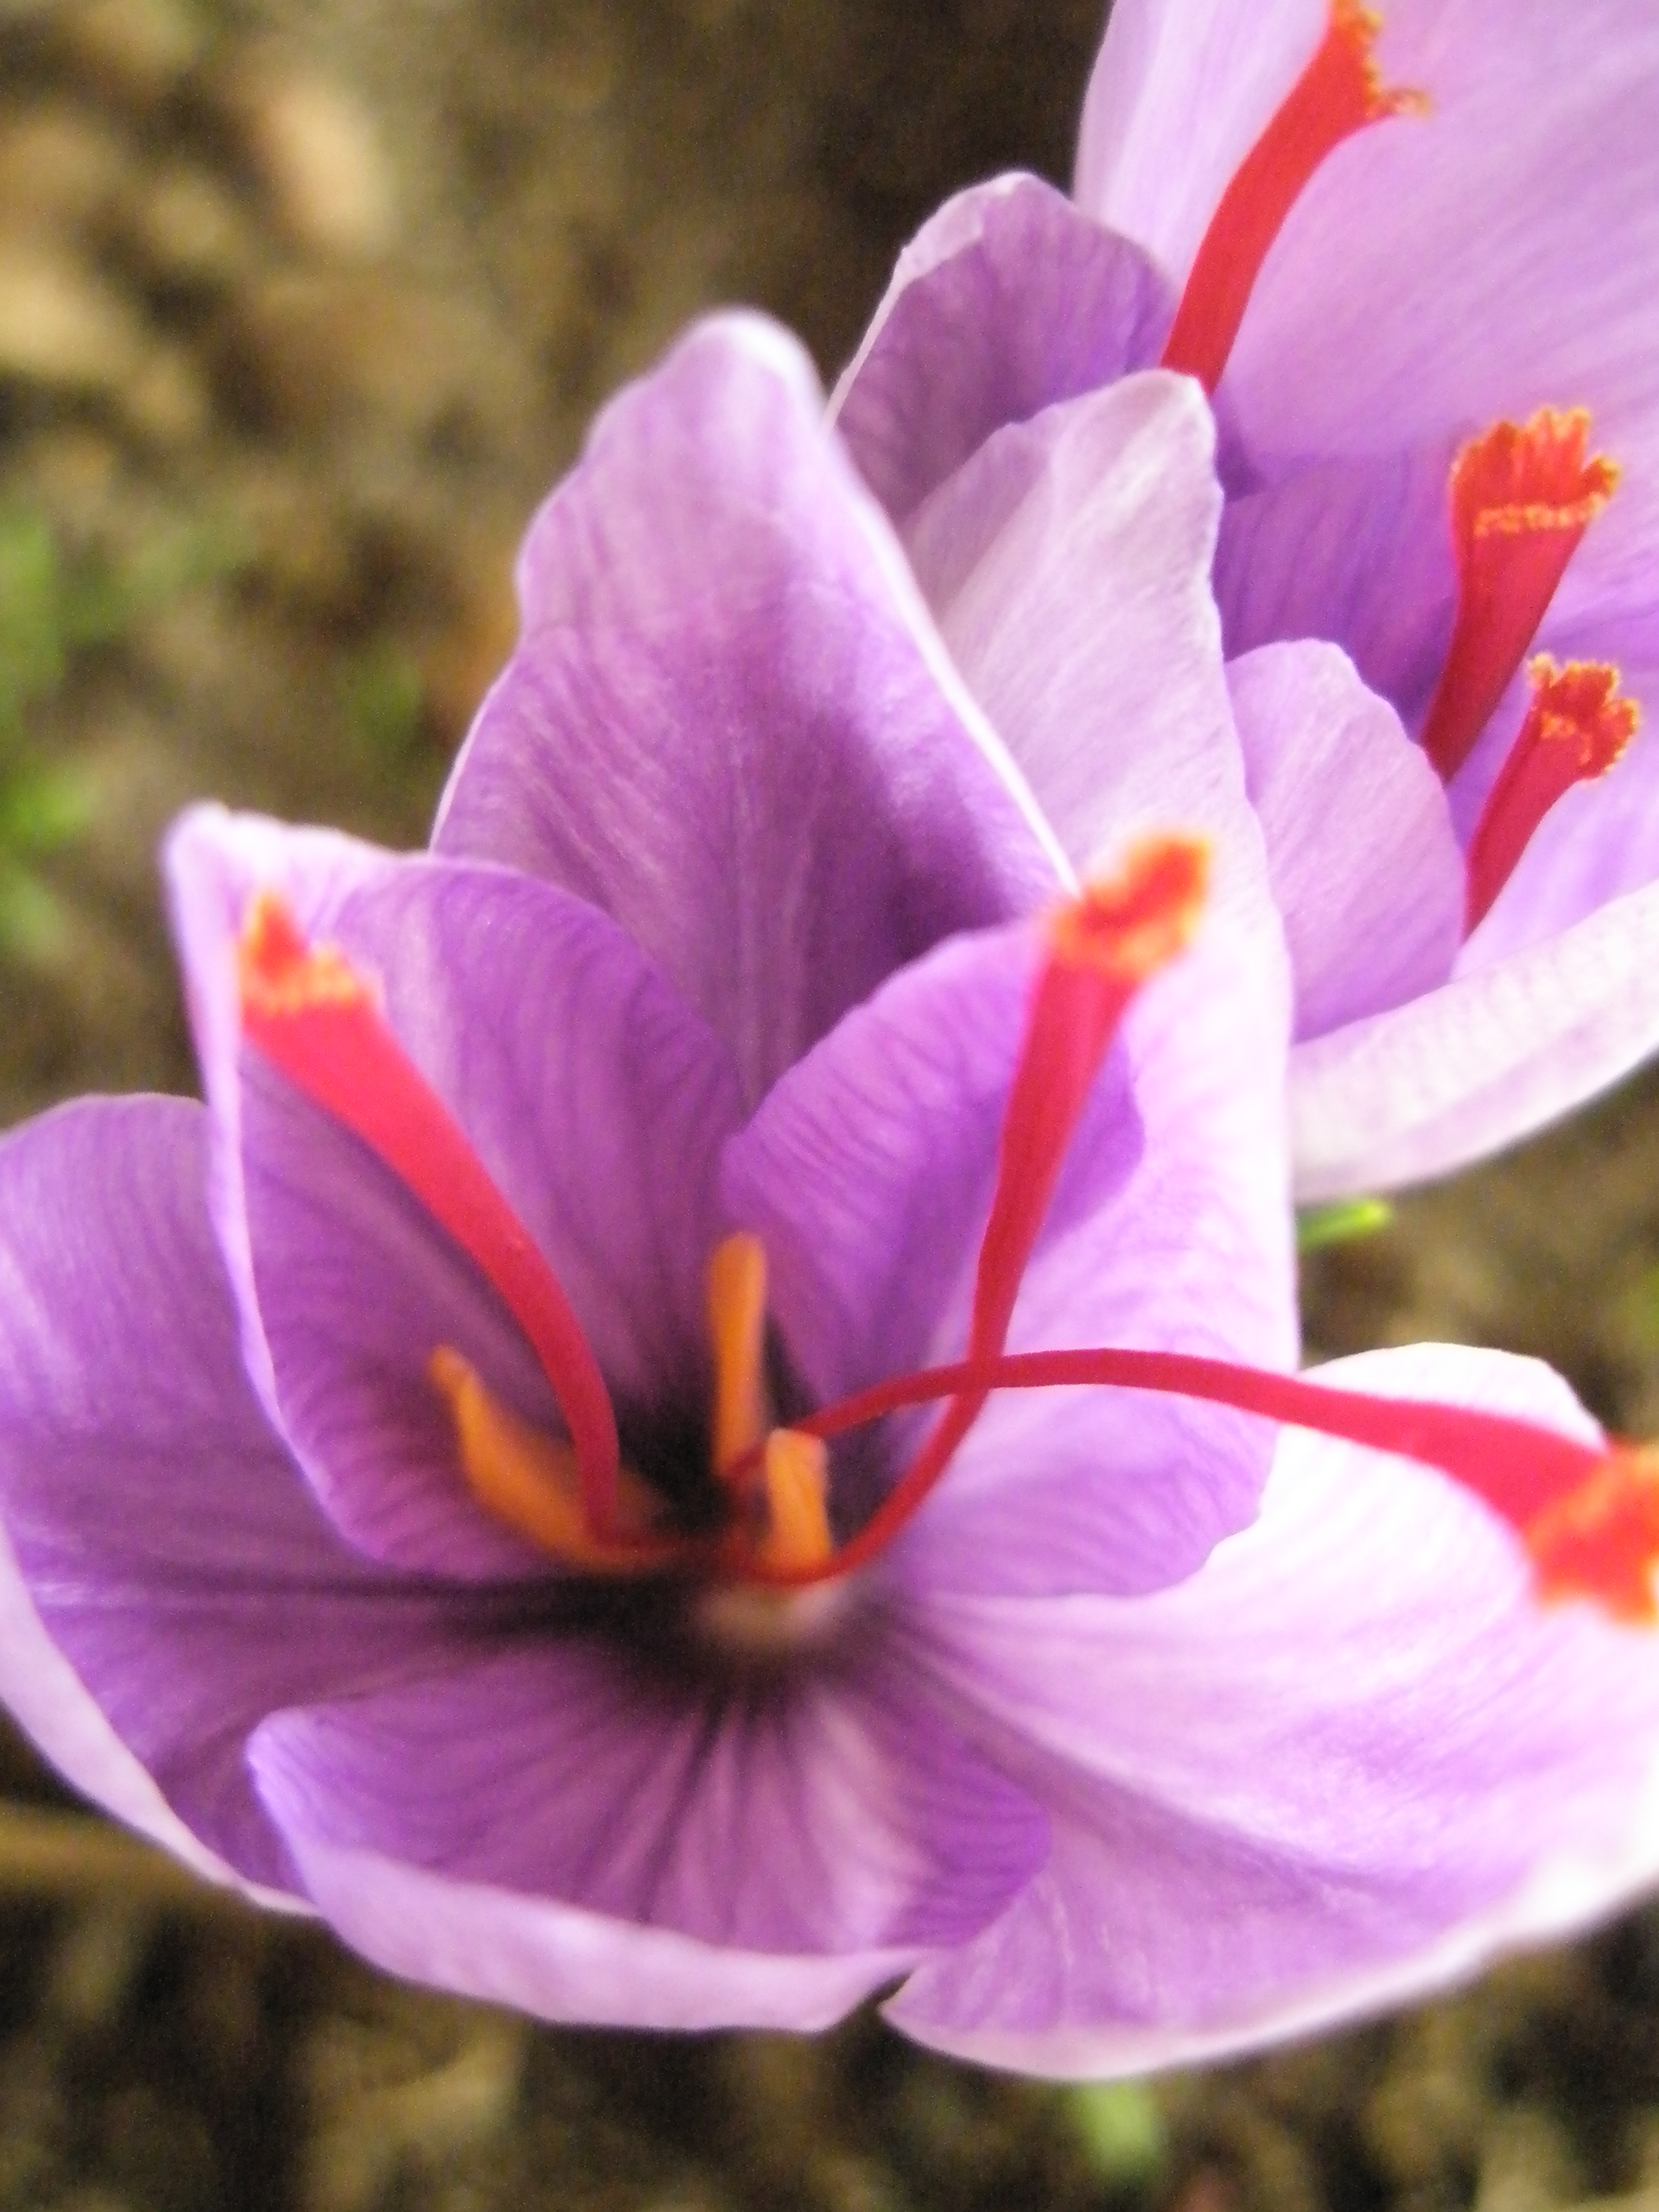 fleurs de safran